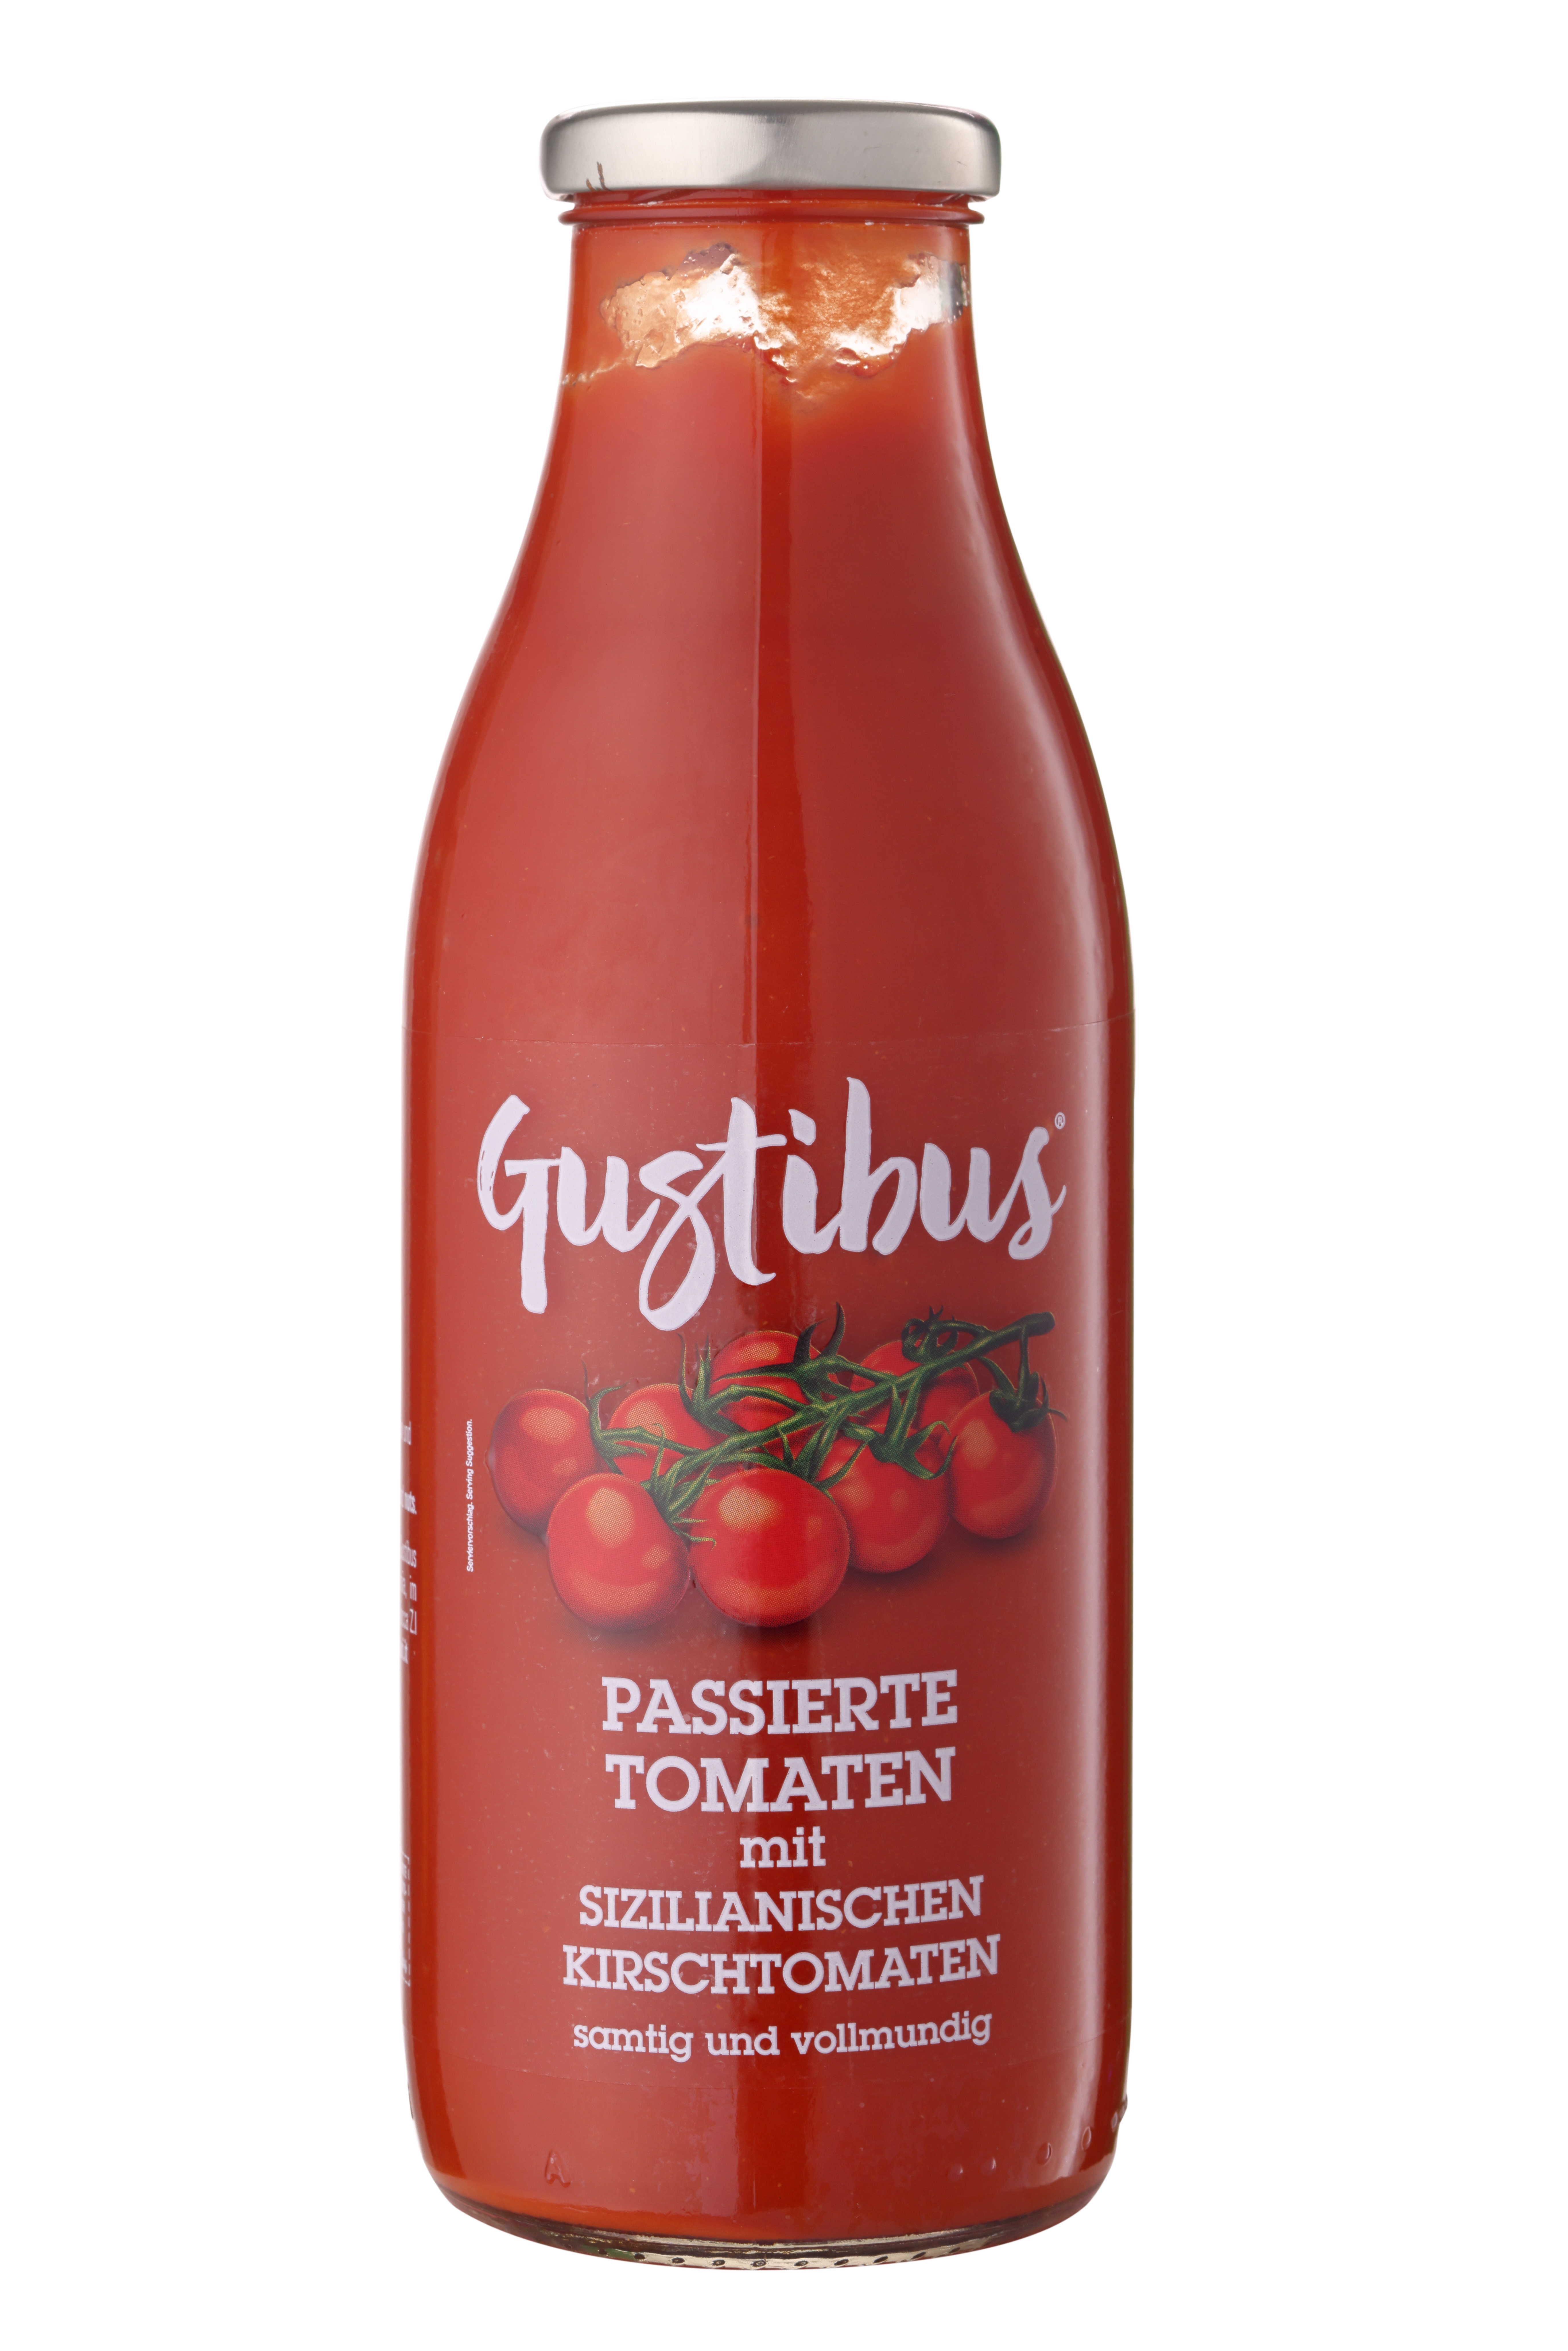 Gustibus, Passierte Tomaten mit Kirschtomaten, 520g